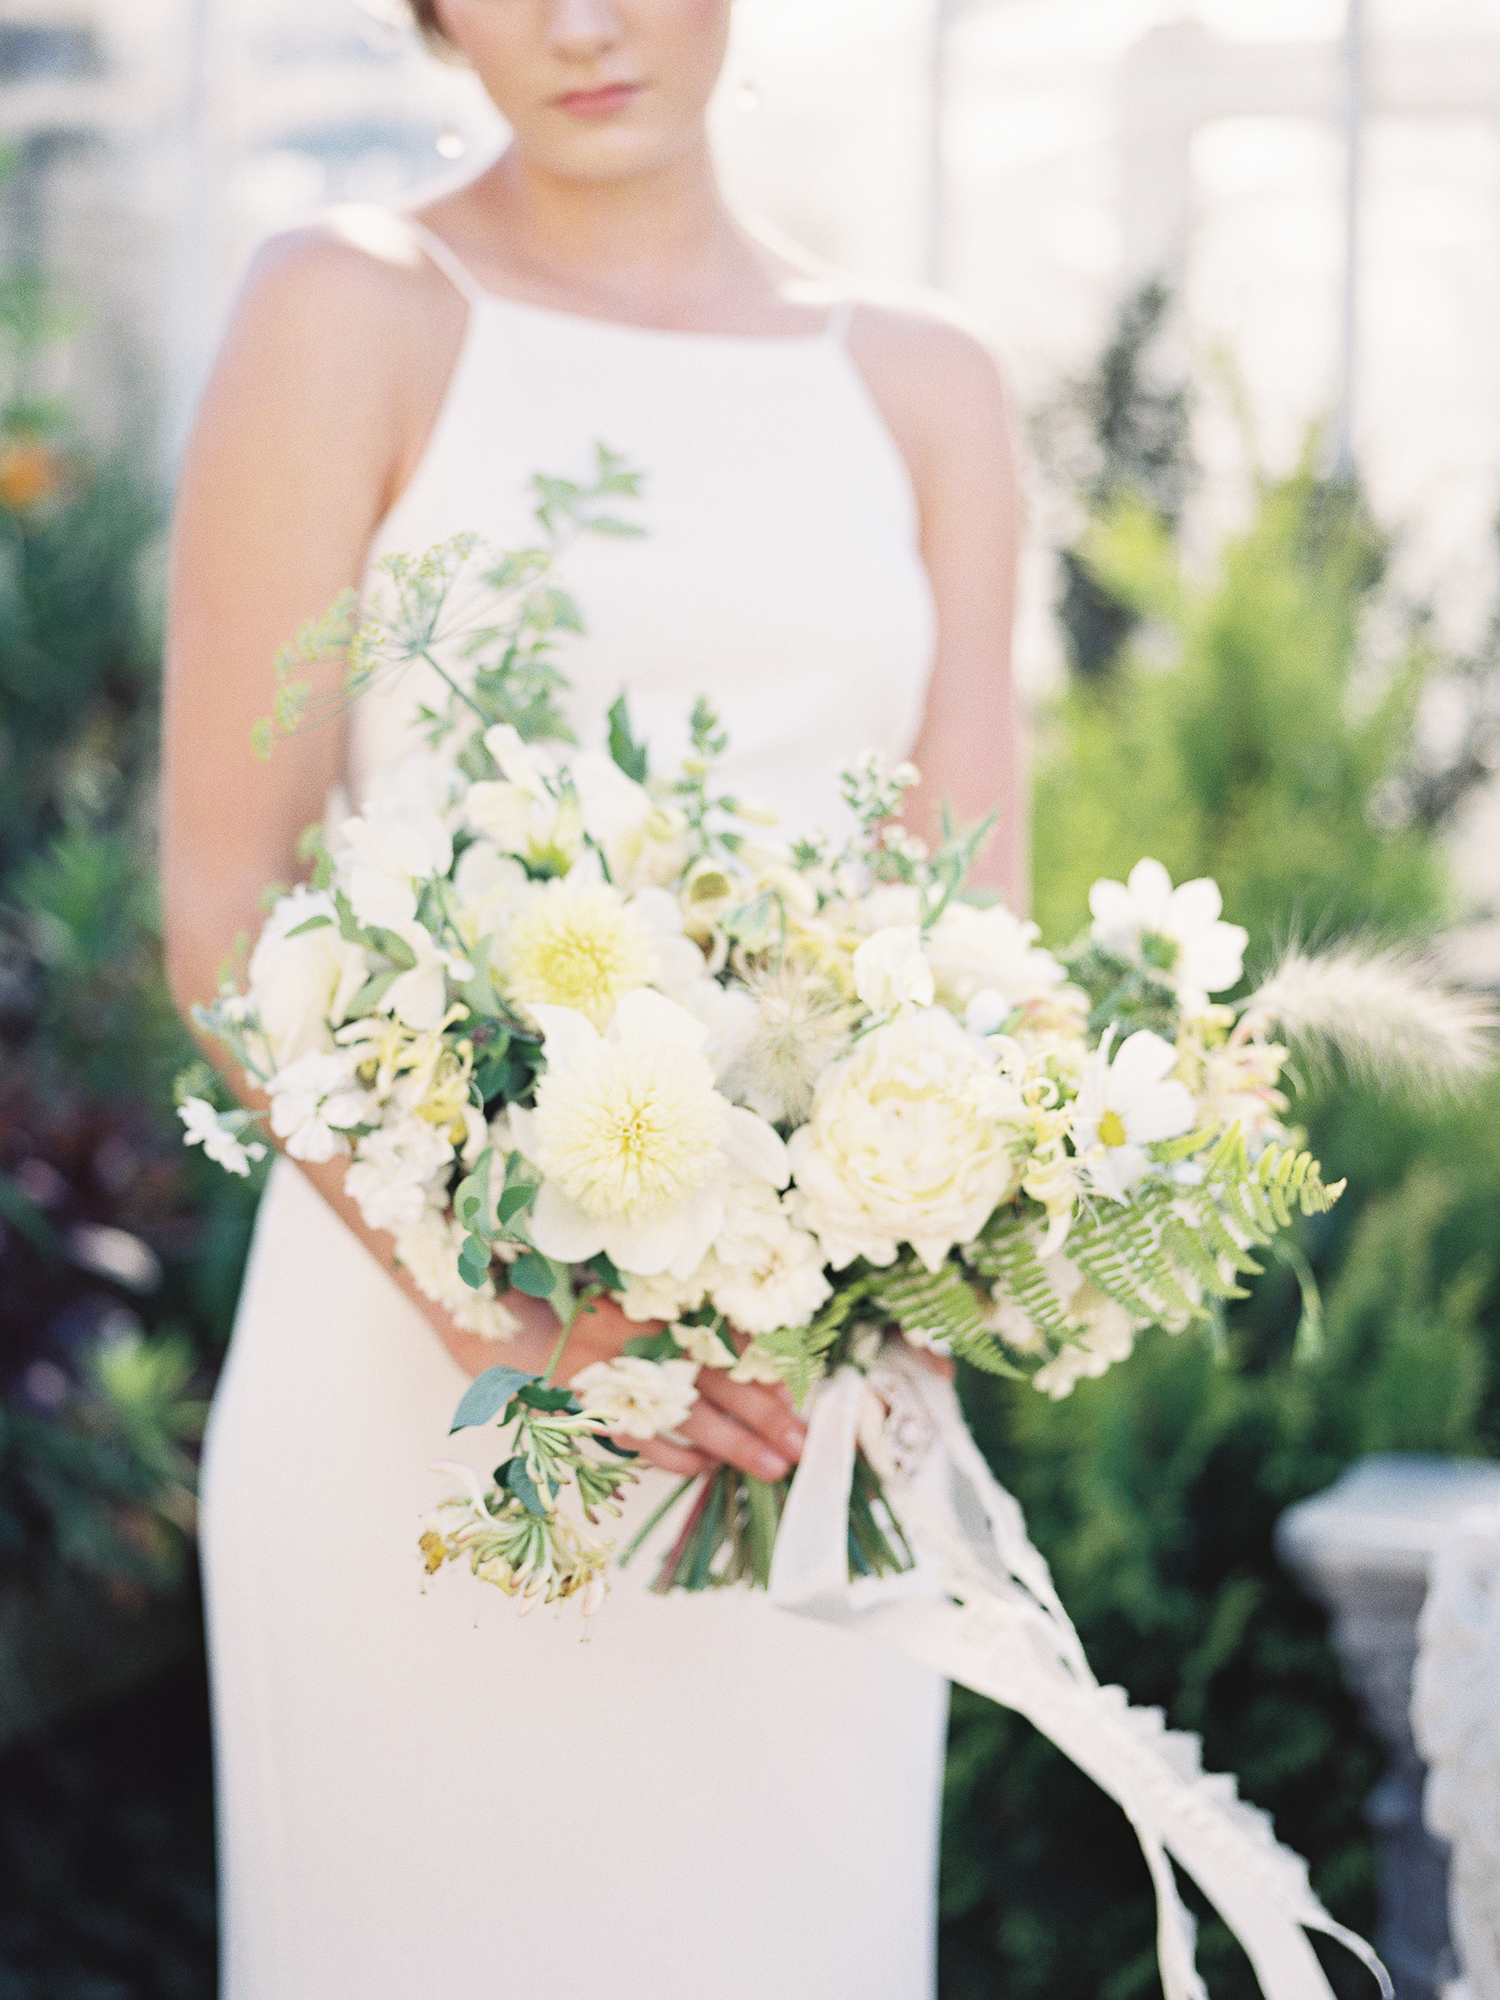 A woman holding a bridal bouquet